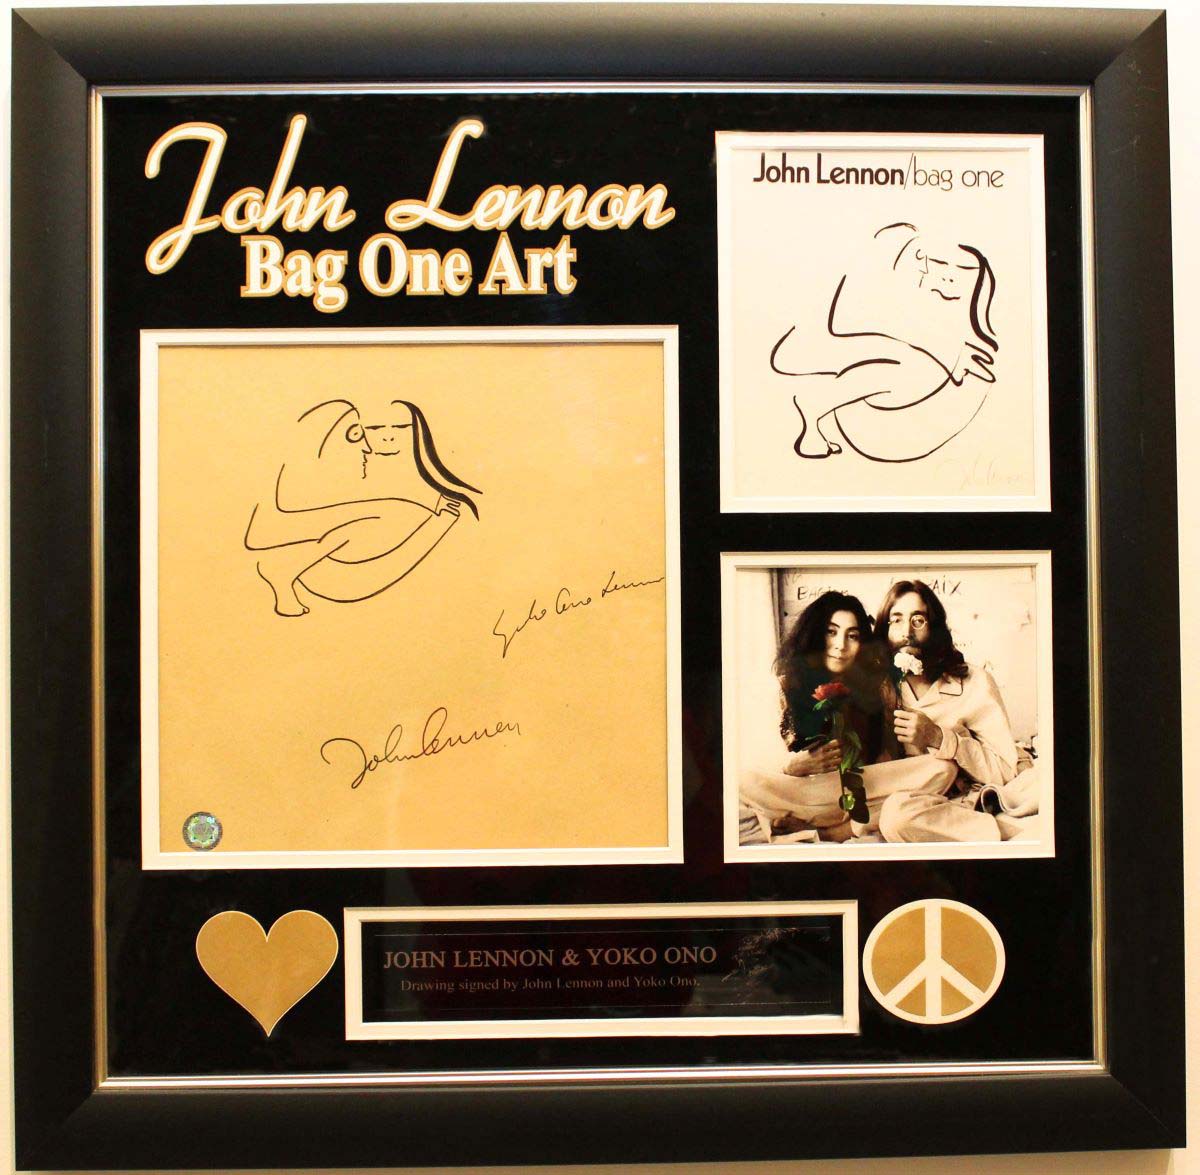 Beatles John Lennon. Title: Bag One, Original Sketch, 23x23 in by a member of the Beatles John Lennon.